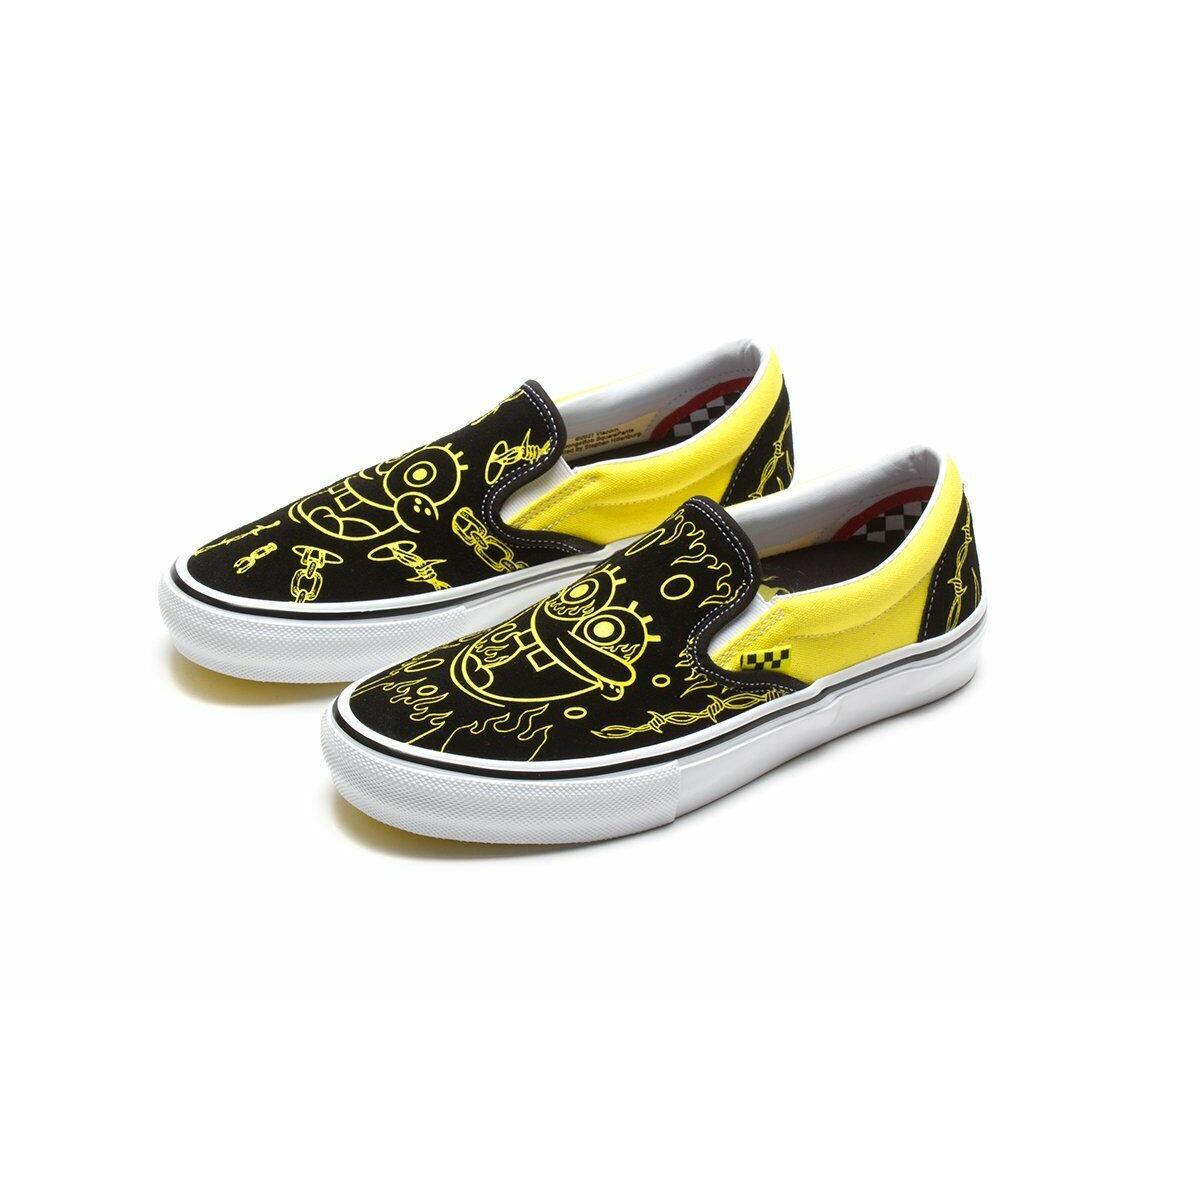 Vans Skate Slip-on Spongebob Squarepants Shoes Black / Yellow Men`s Size 9